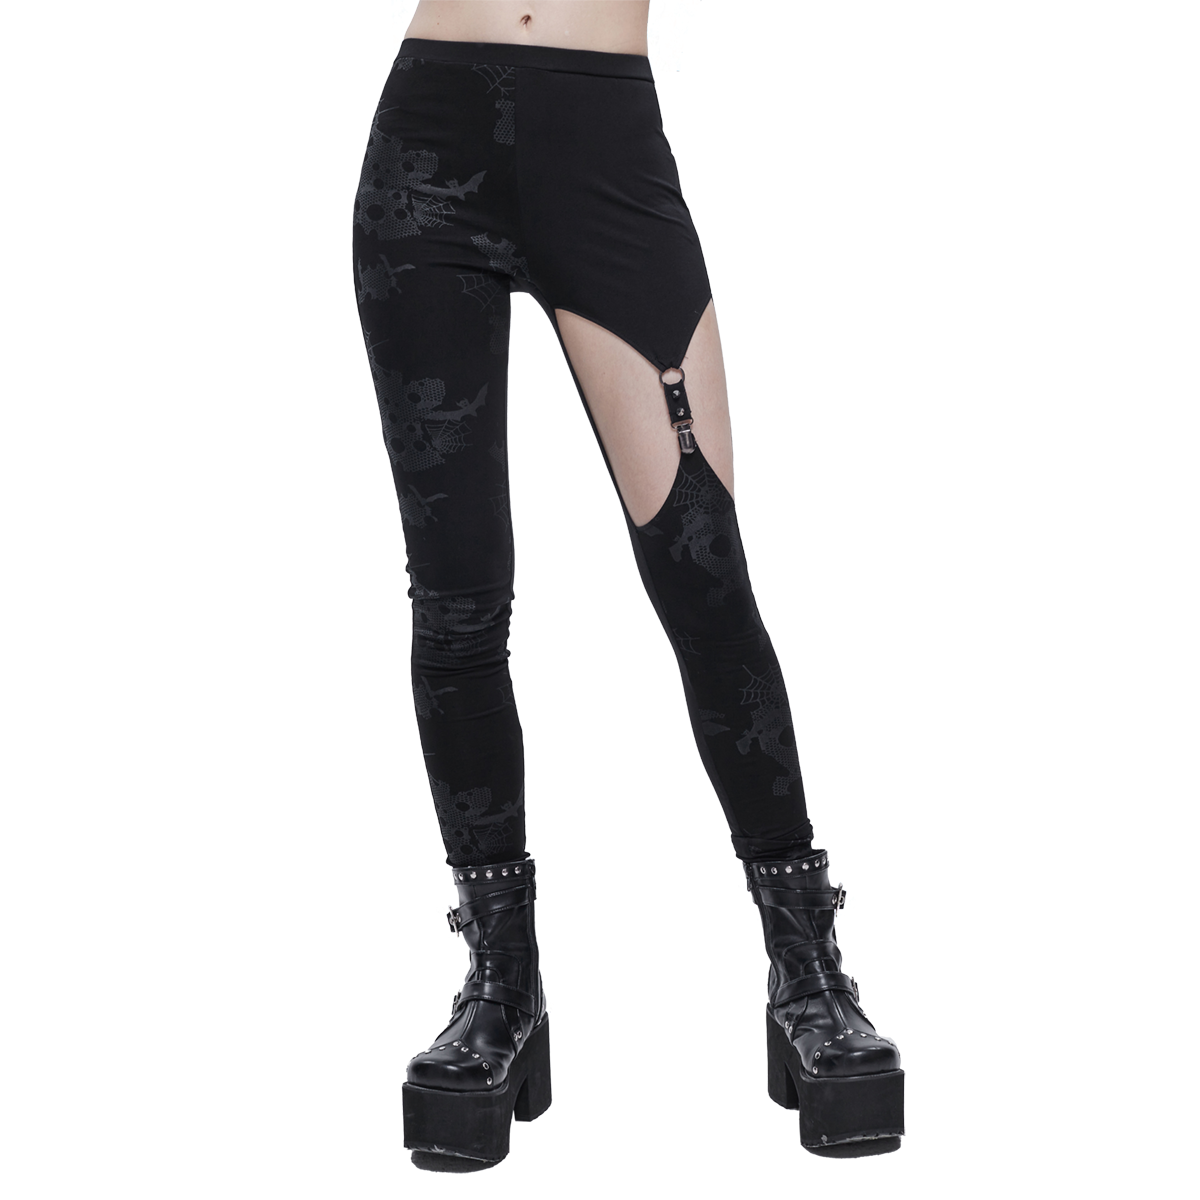 Punk Asymmetrical Stretch Trousers with Print for Lady / Fashion Women‘s Black Leggings - HARD'N'HEAVY